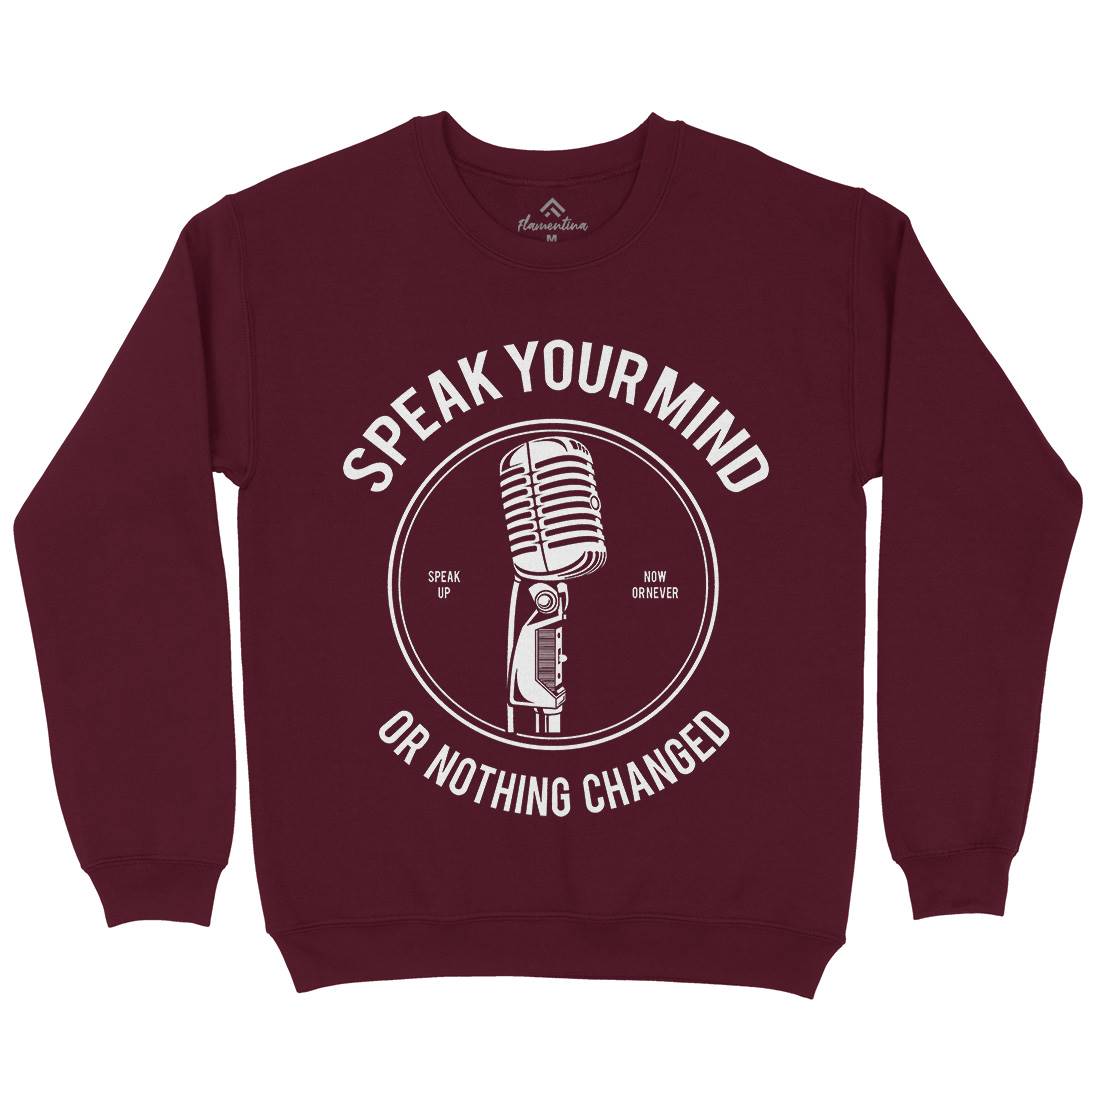 Speak Your Mind Mens Crew Neck Sweatshirt Quotes A152